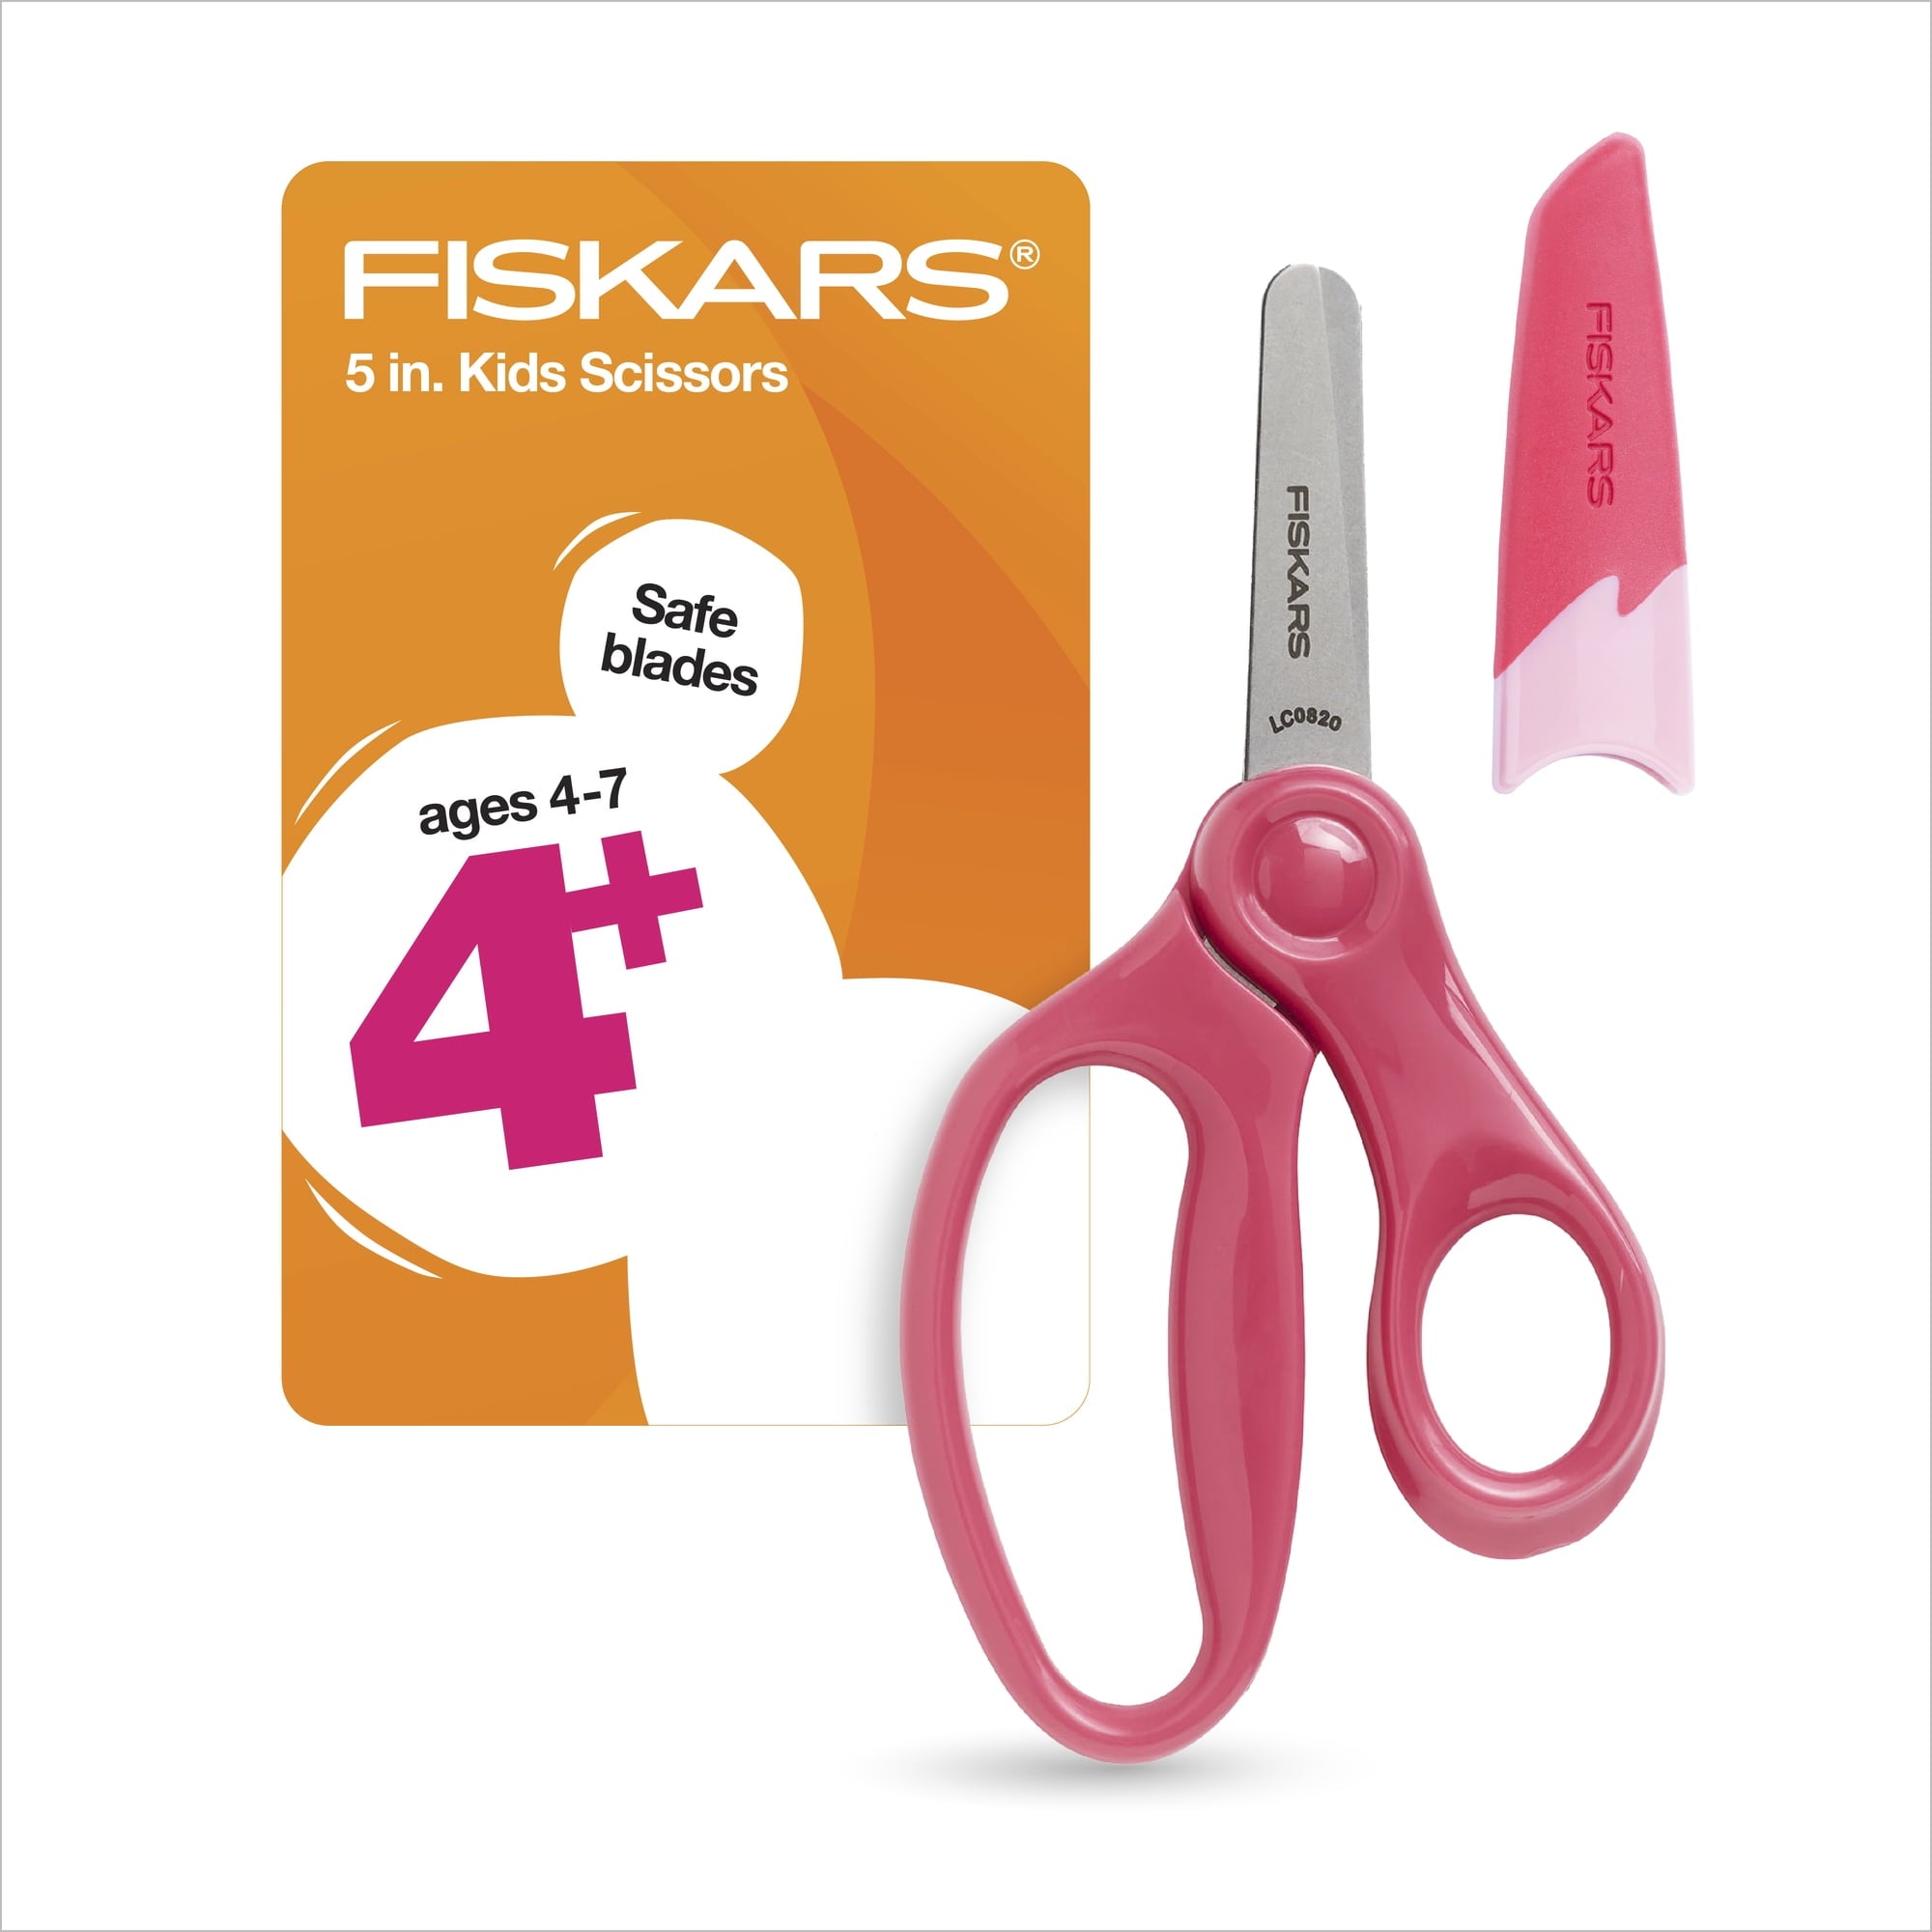 Fiskars 5" Pointed Kids Scissors with Eraser Sheath (Ages 4+)